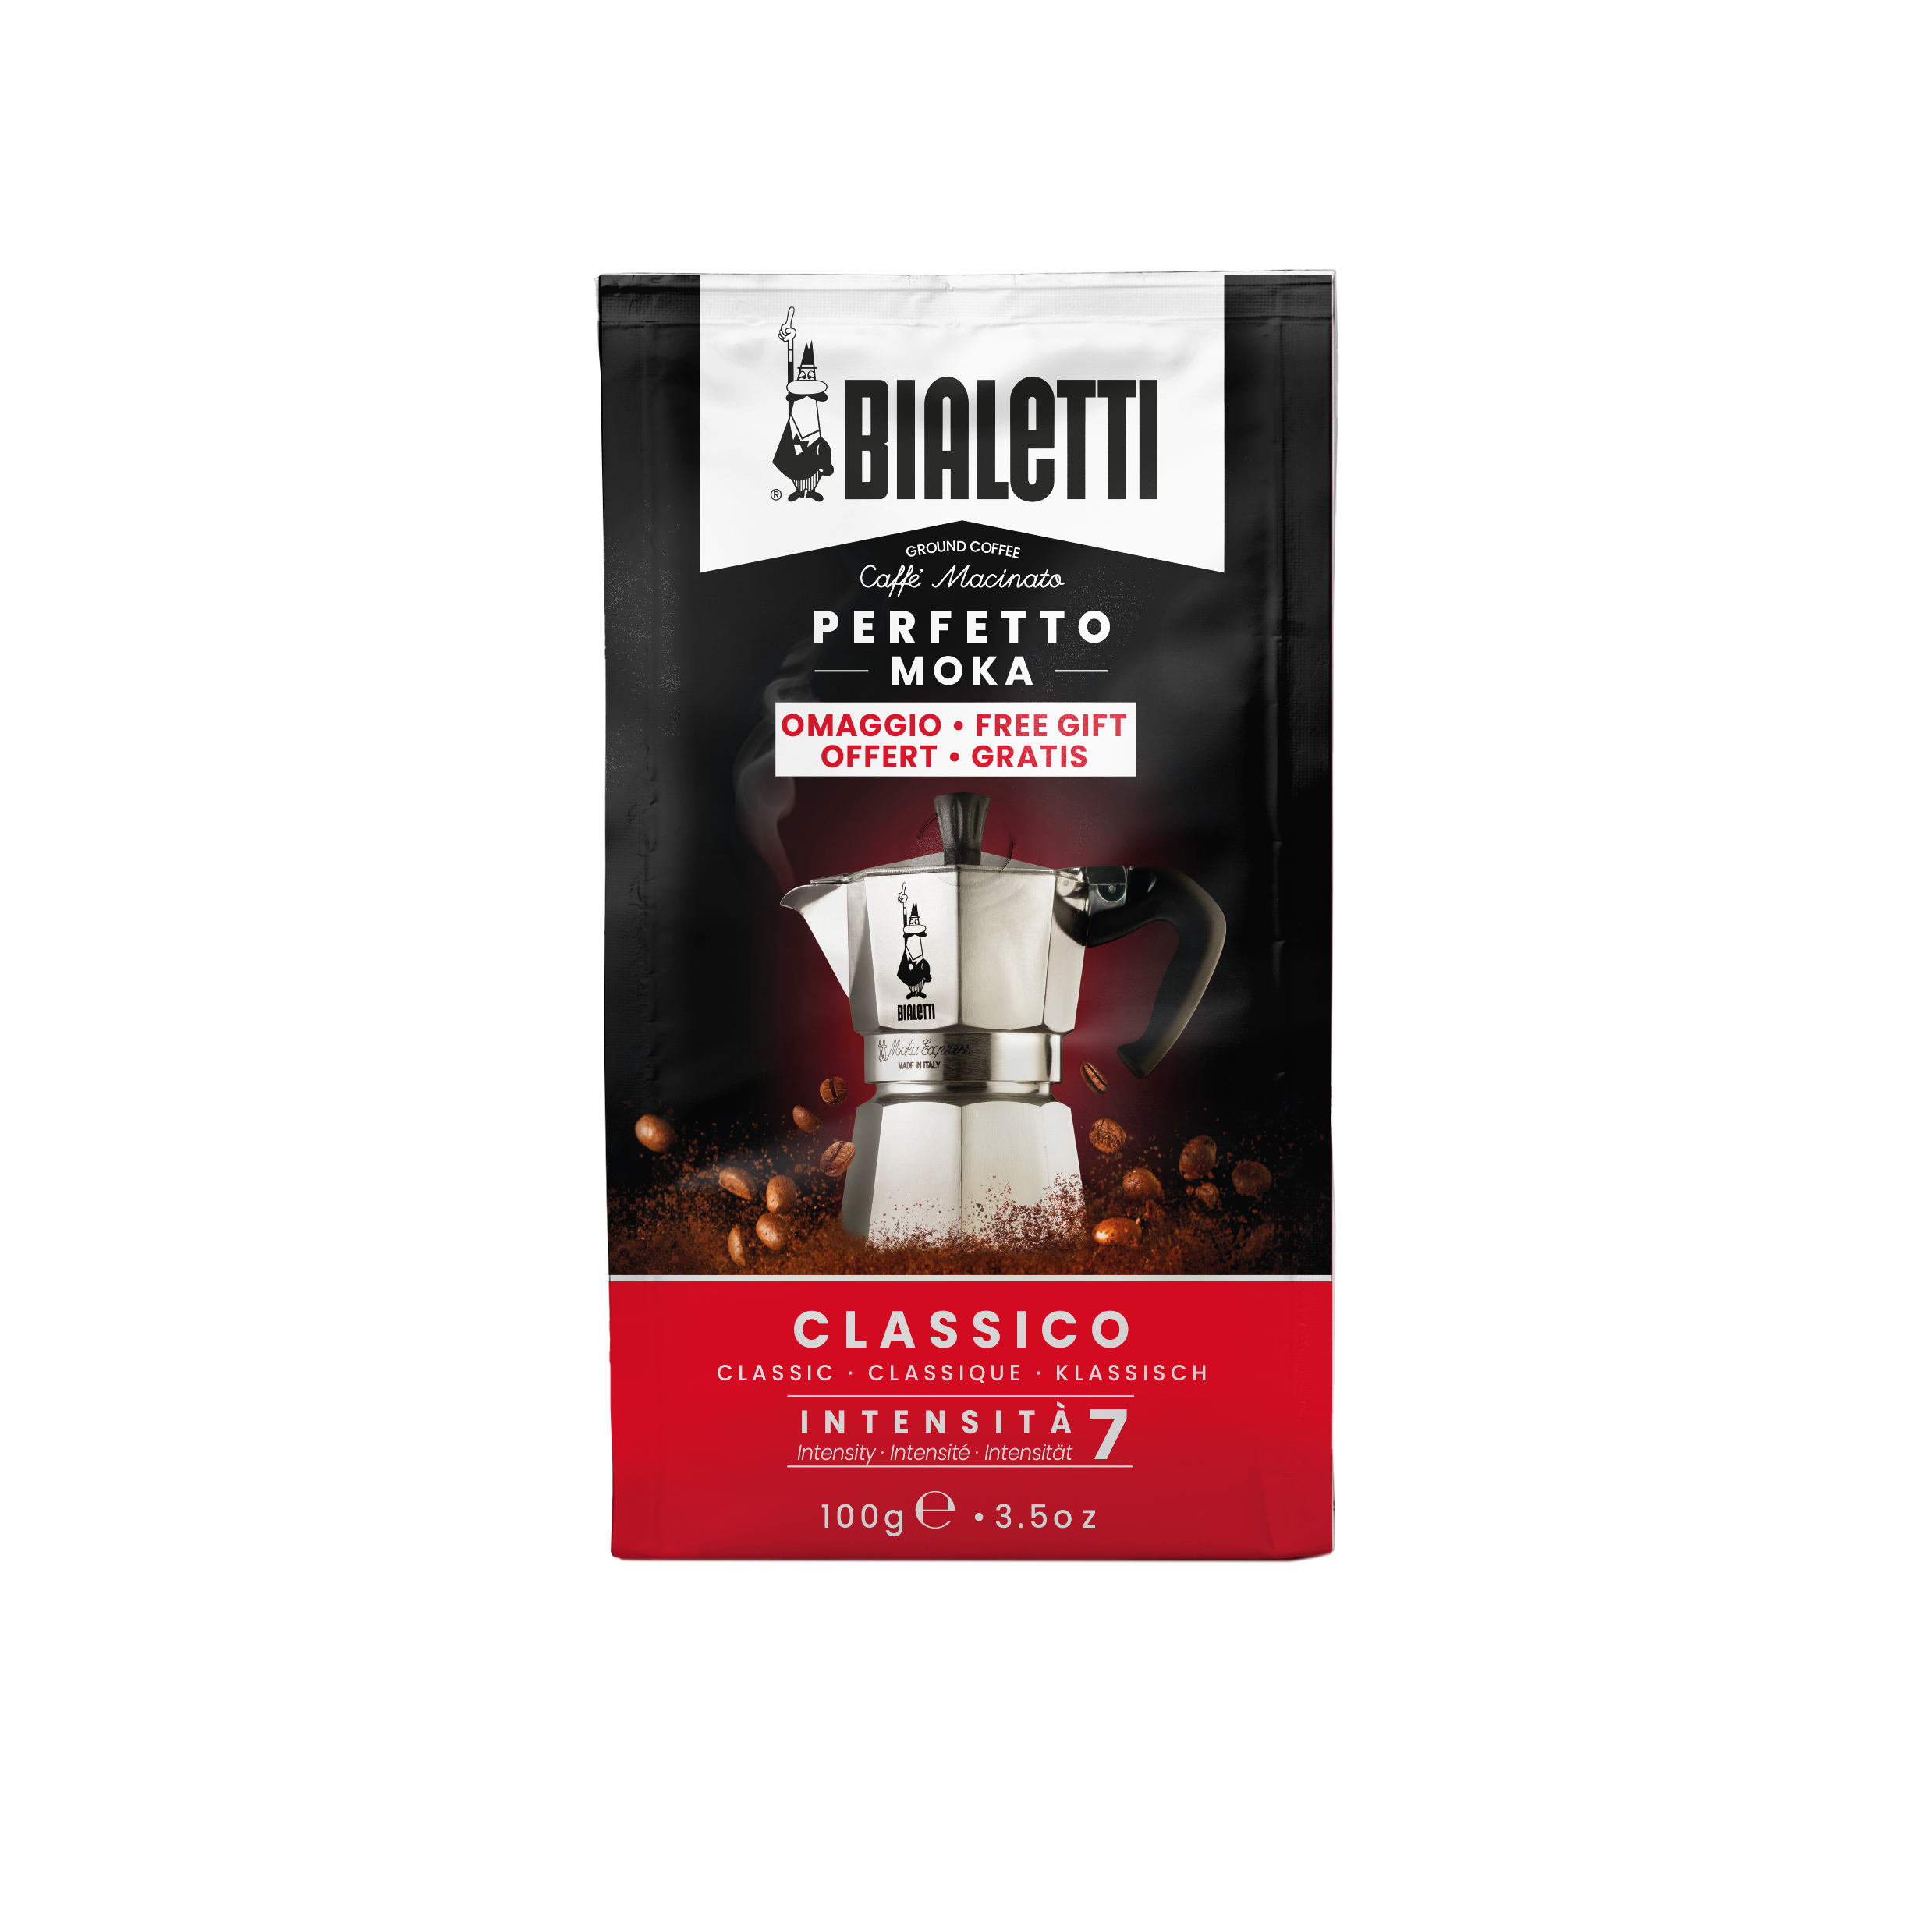 Bialetti Perfetto Moka Classico Coffee Sample 100gm